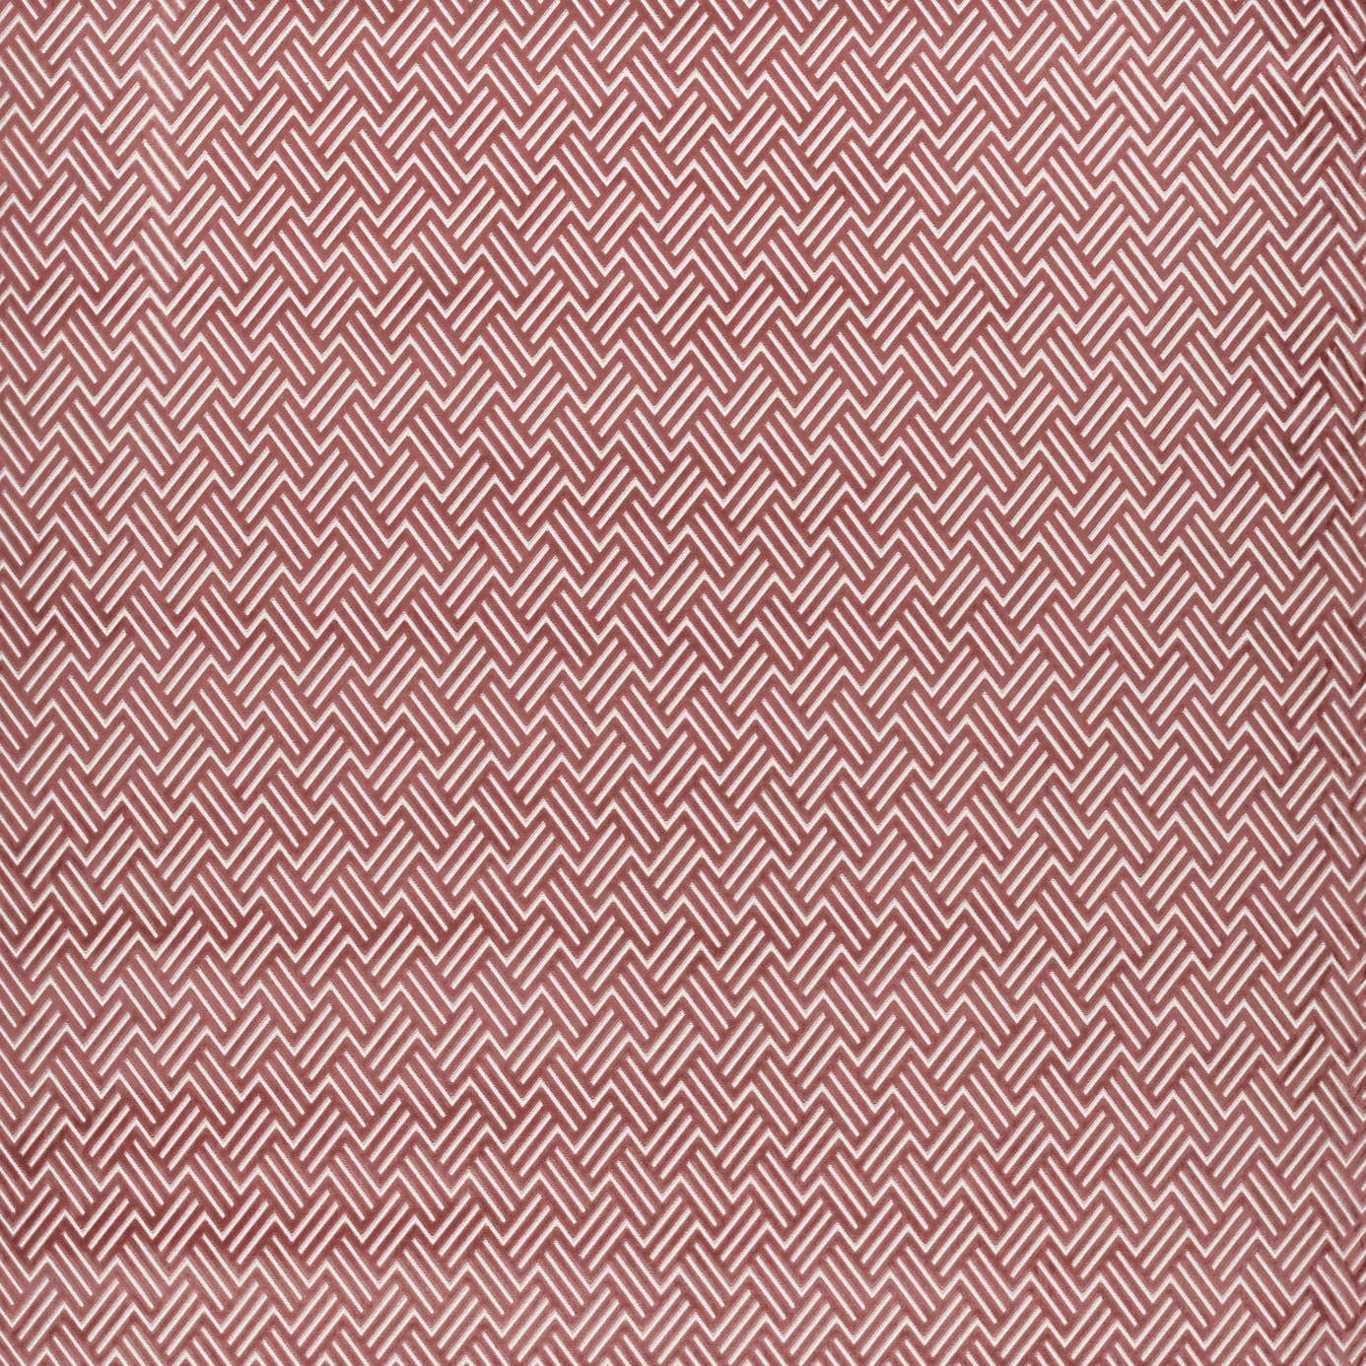 Triadic Rosewood Fabric by HAR